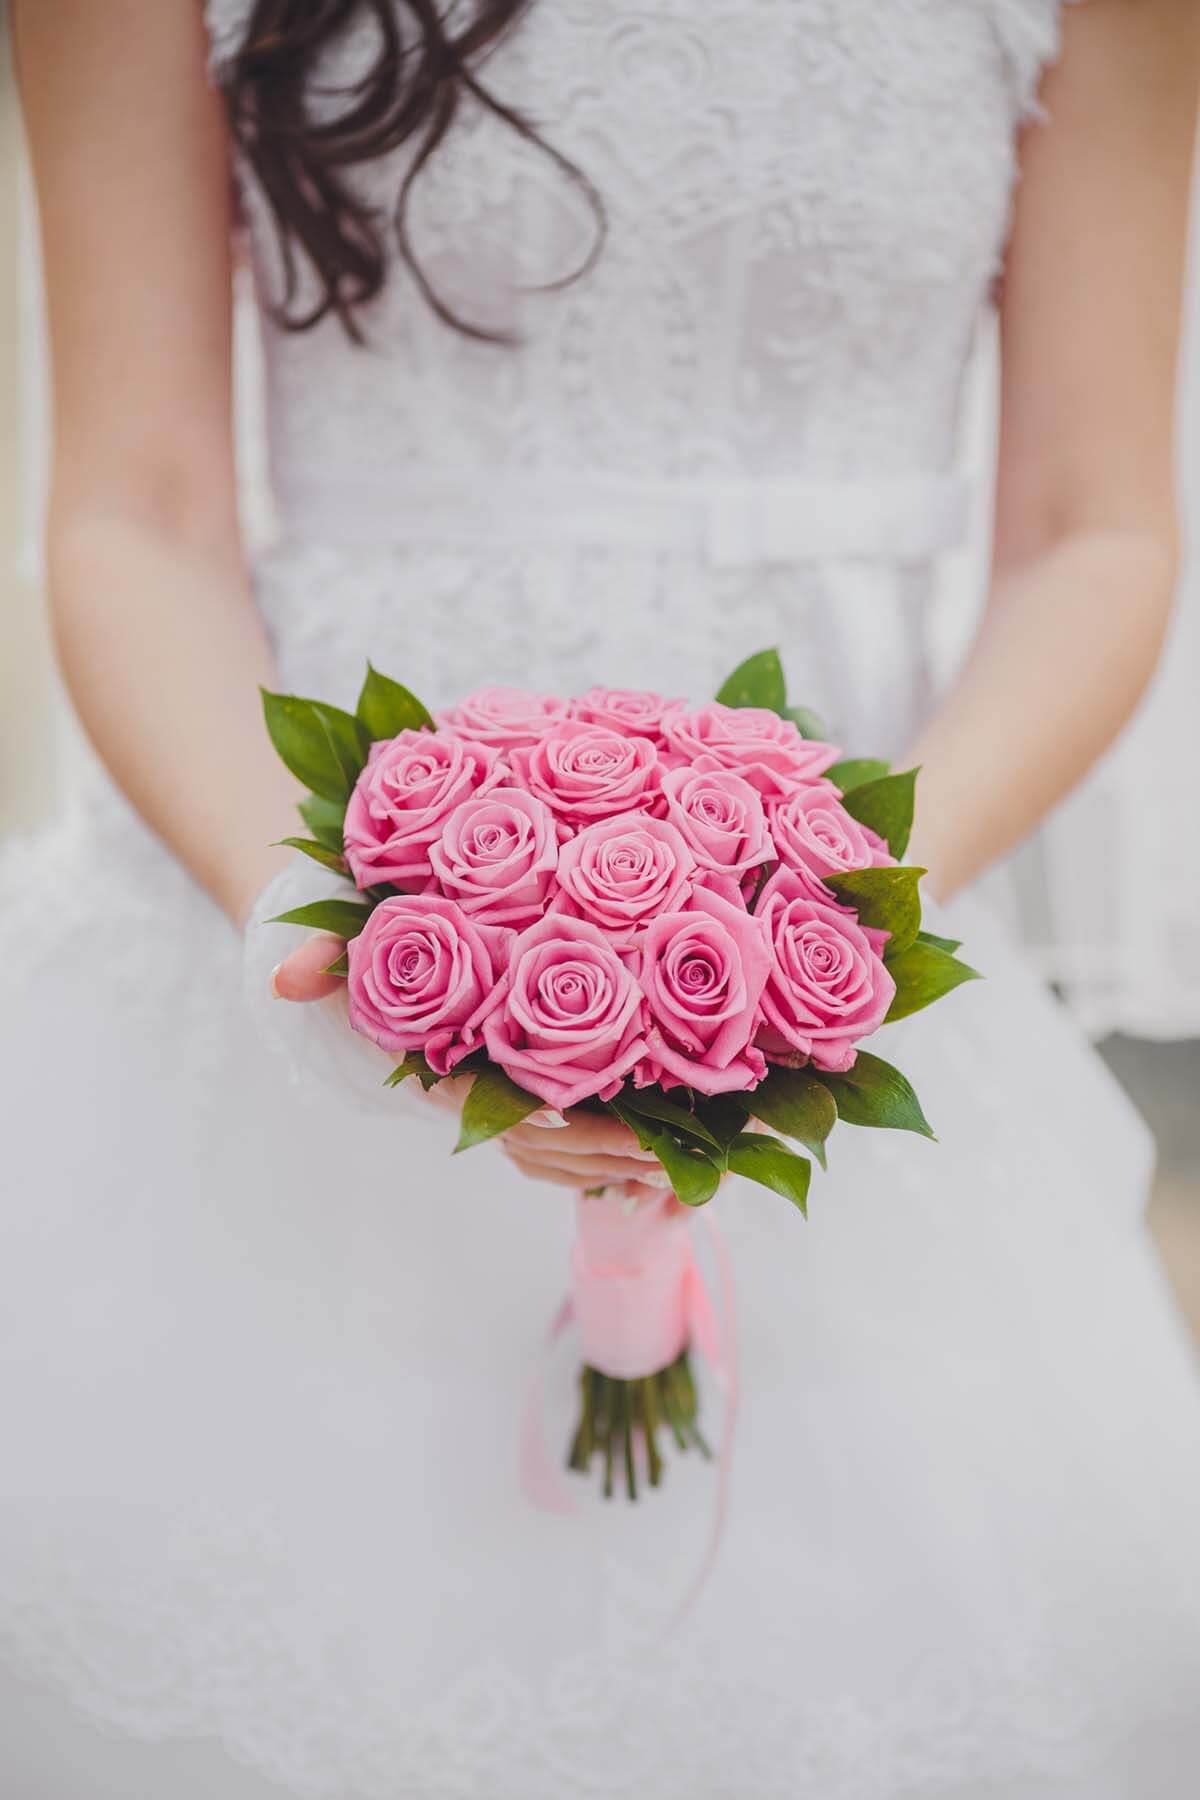 Pink roses bride bouquet: bridal bouquet styles guide